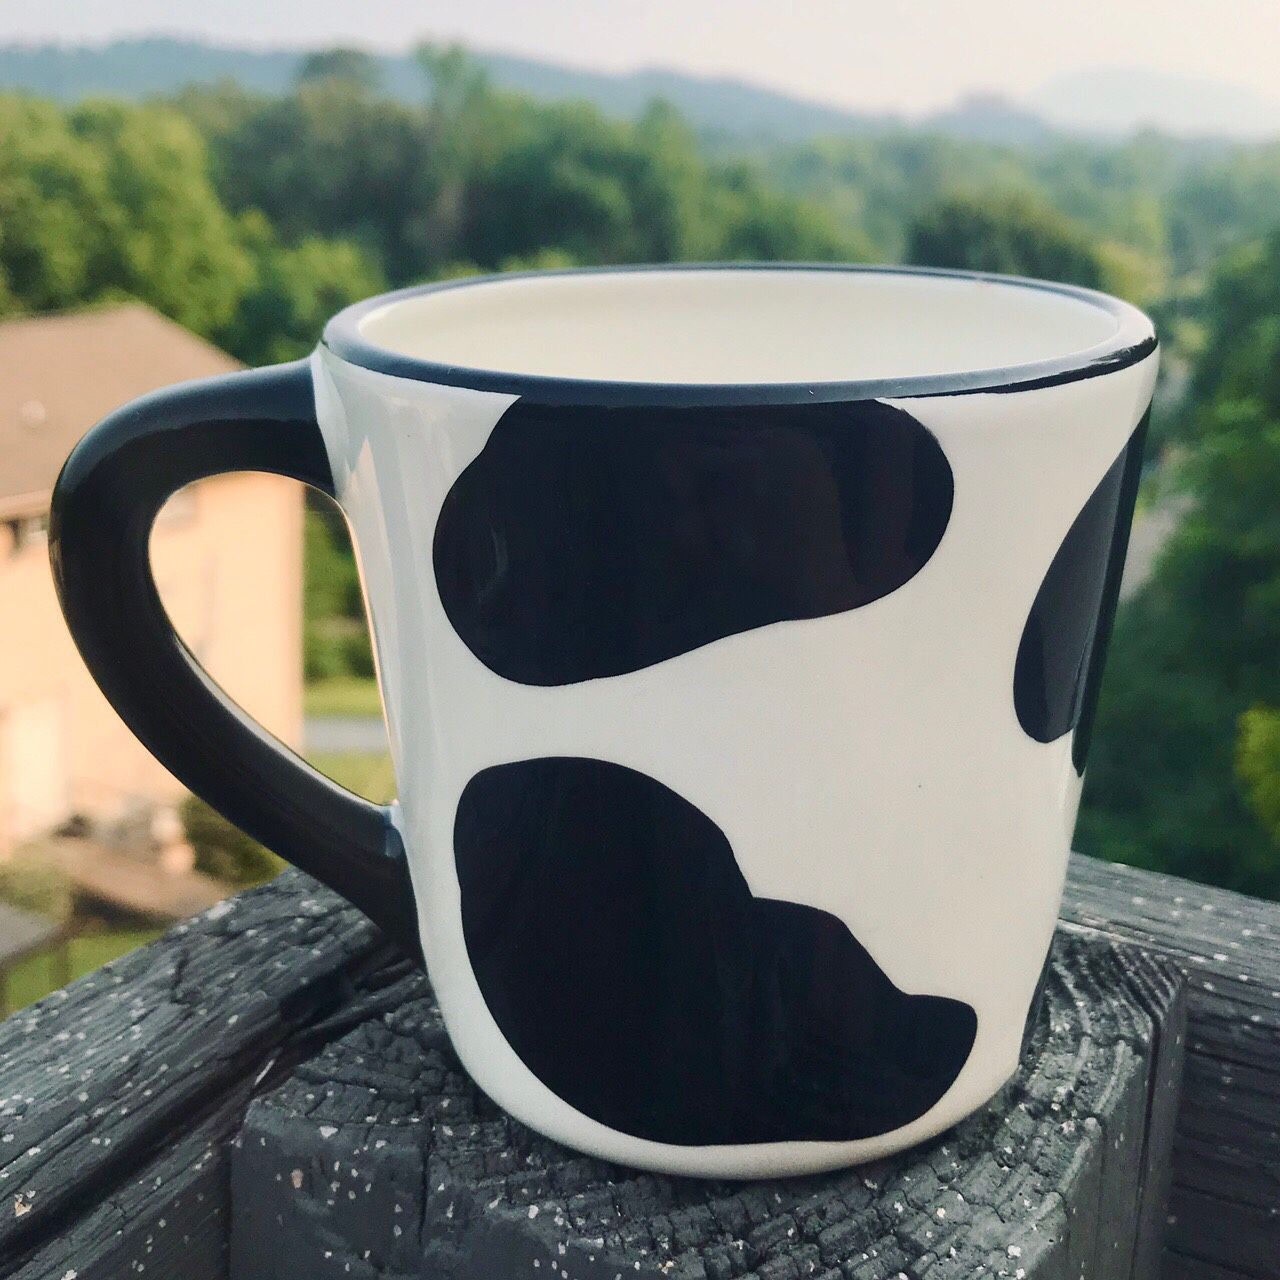 cow mug with figurine